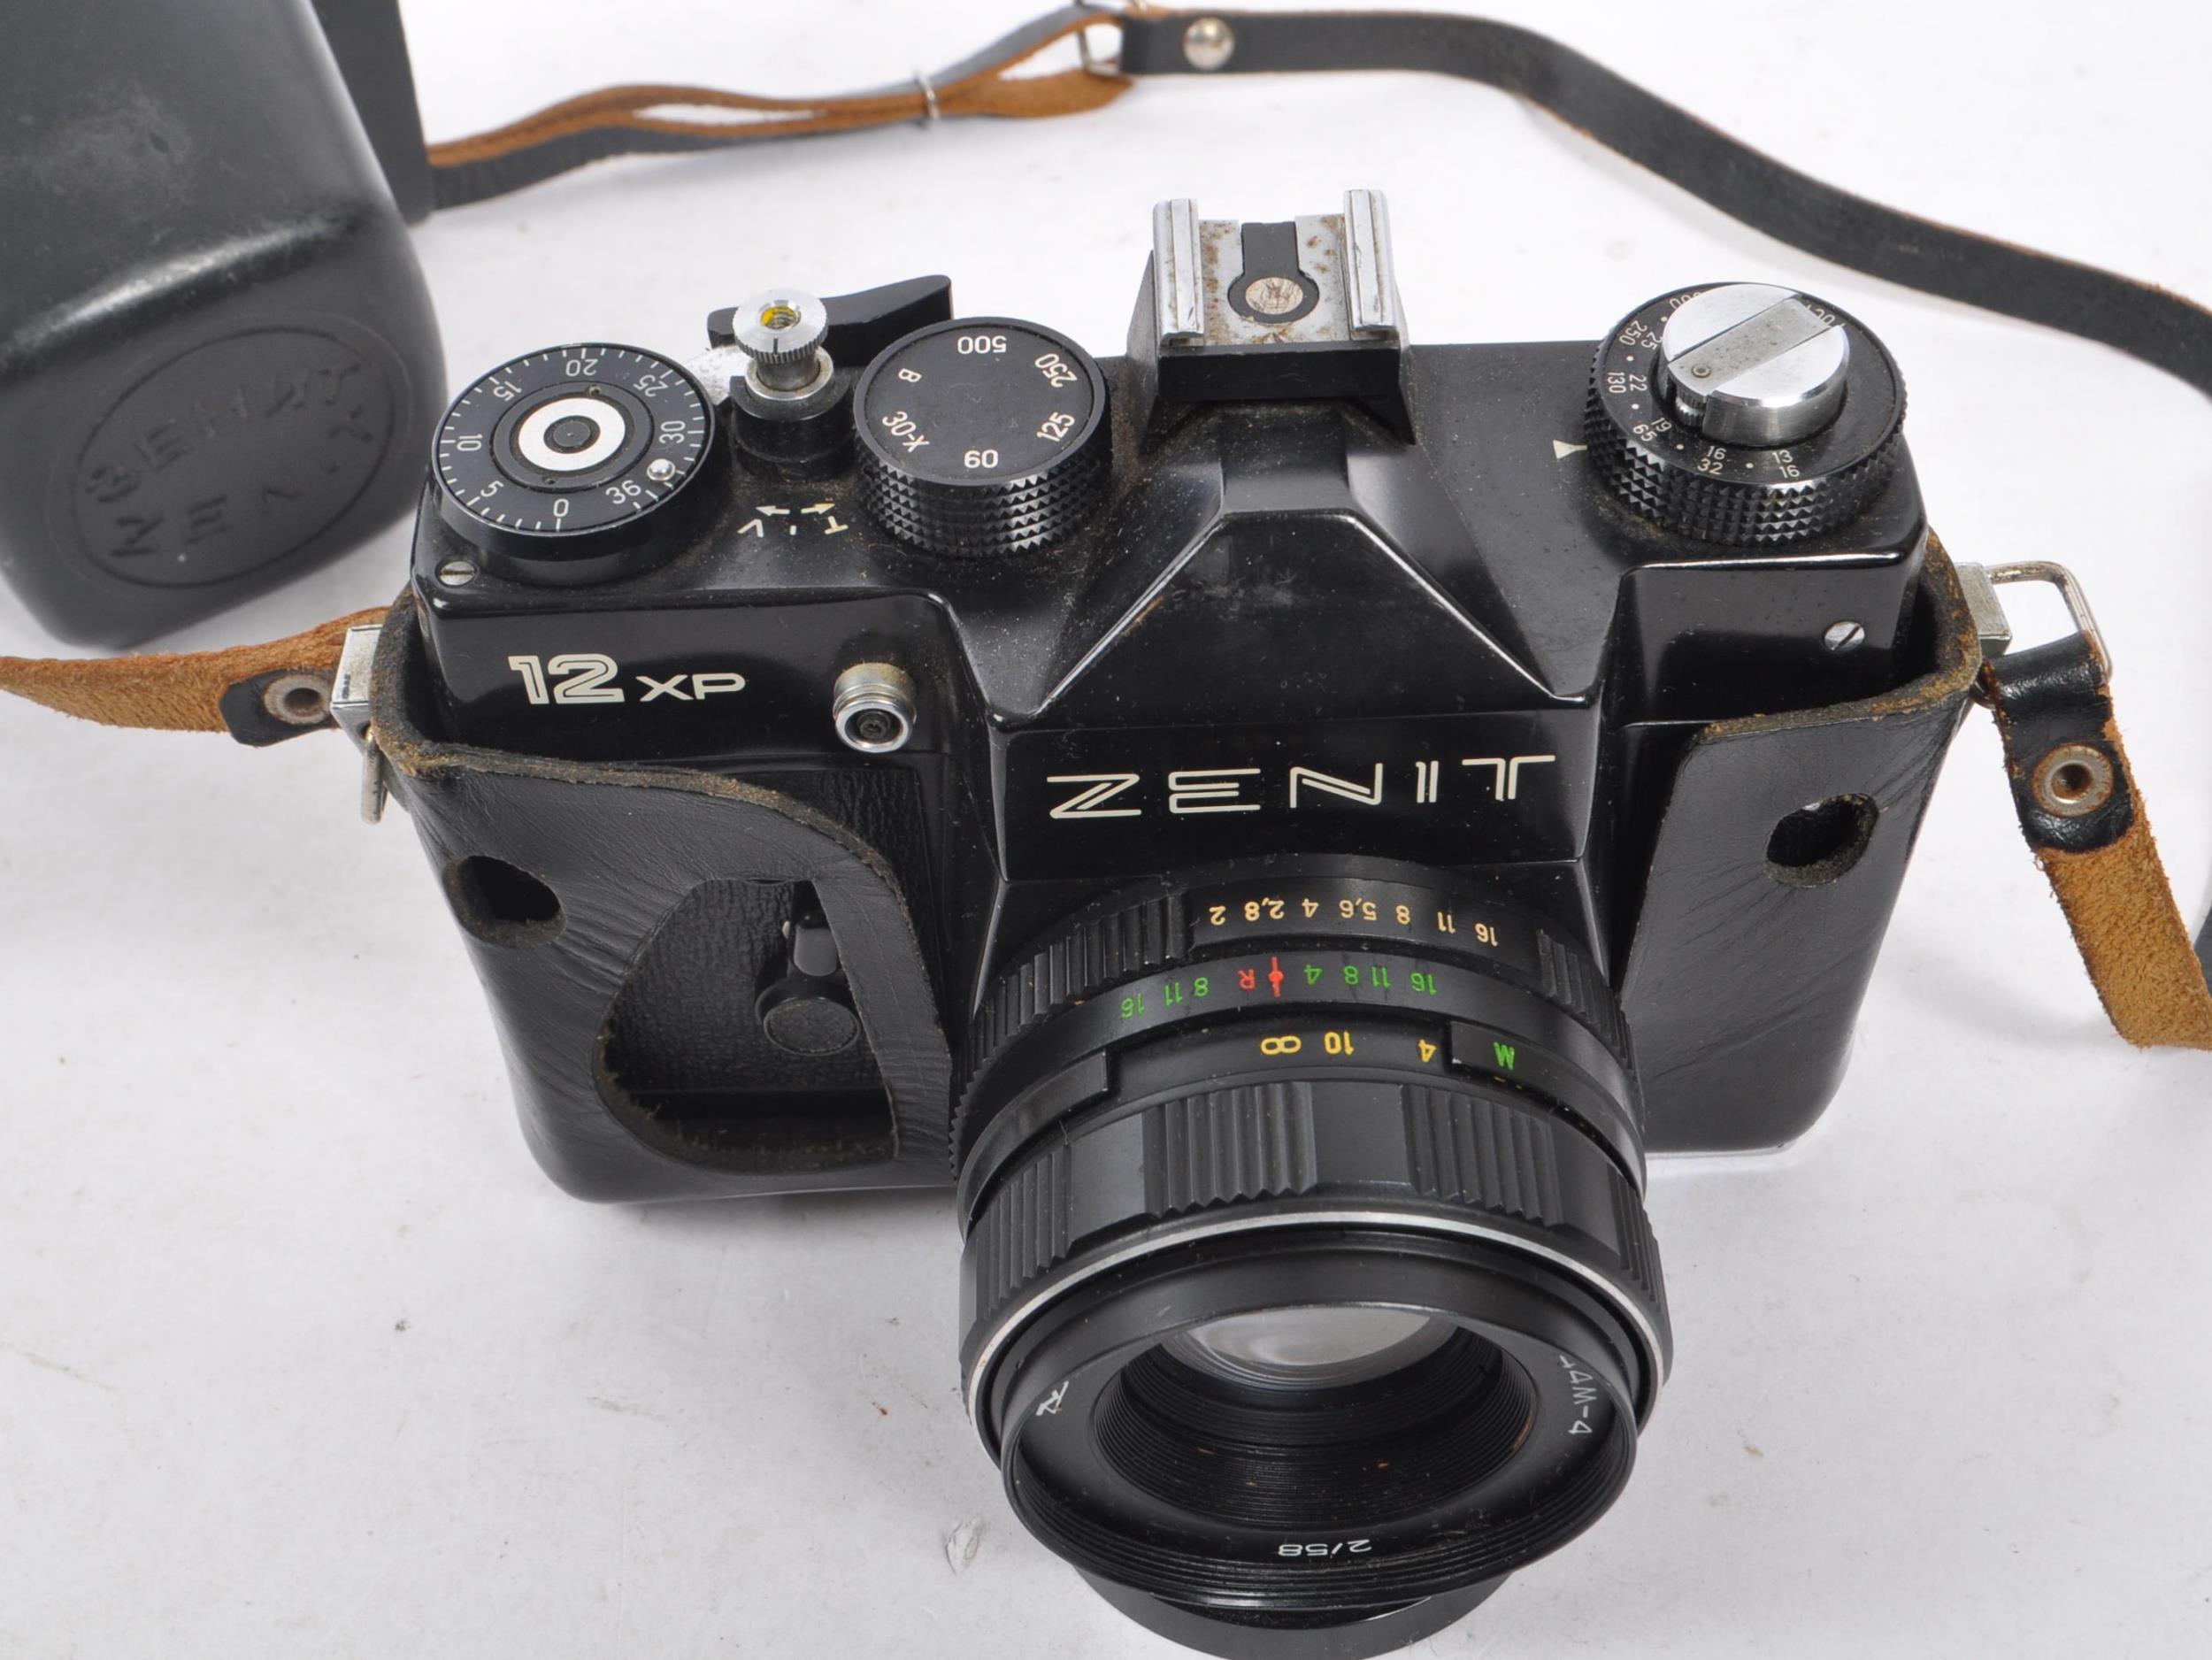 ZENIT - MID CENTURY 12XP 35MM SLR CAMERA - Image 3 of 6